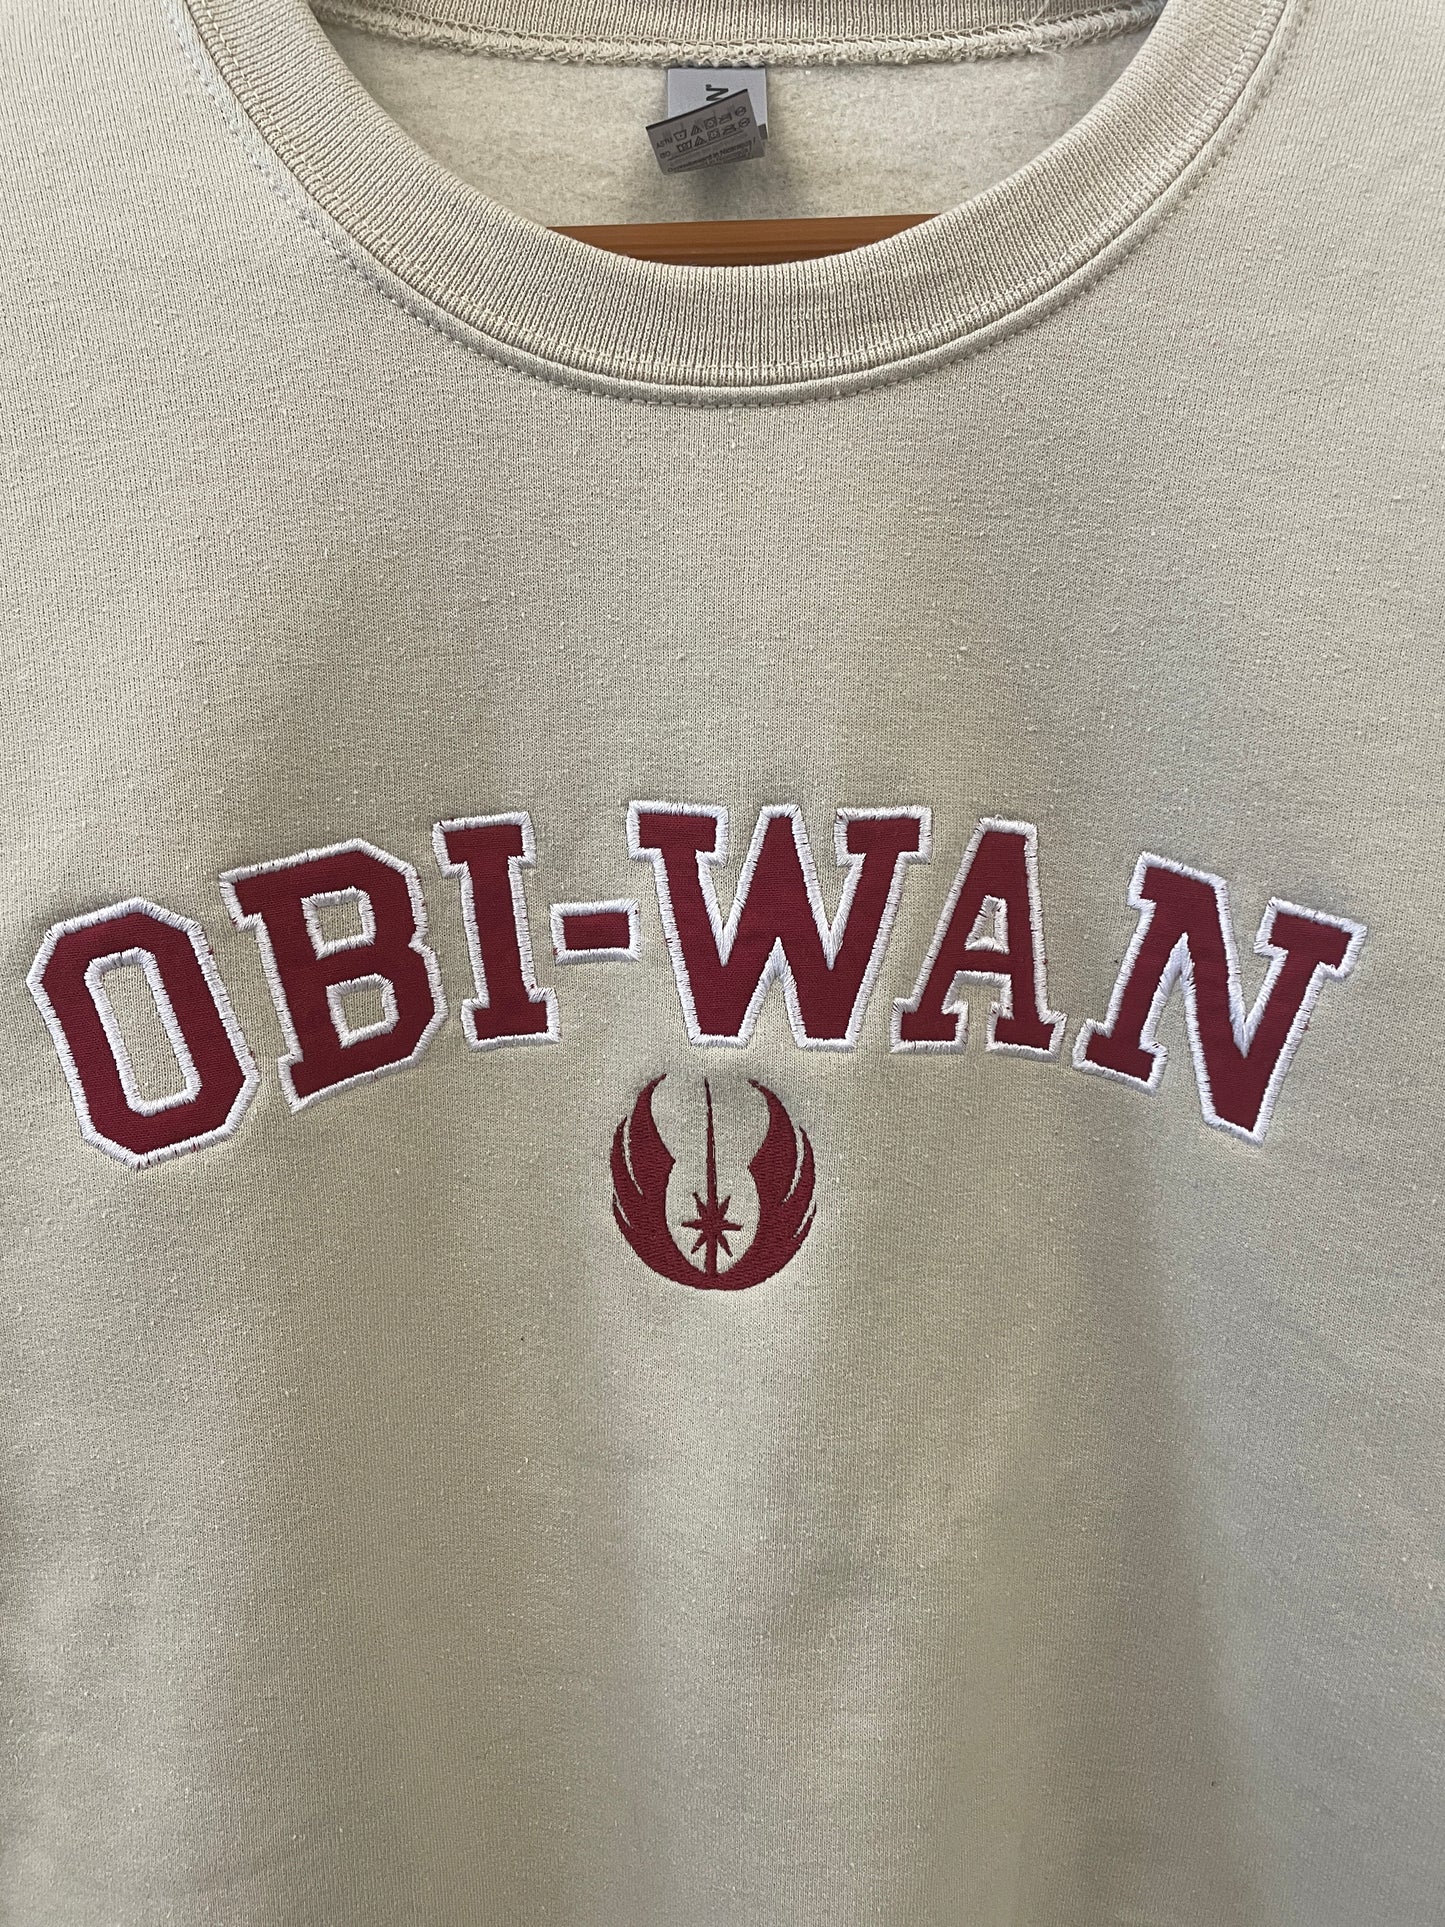 Obi-Wan Sweatshirt